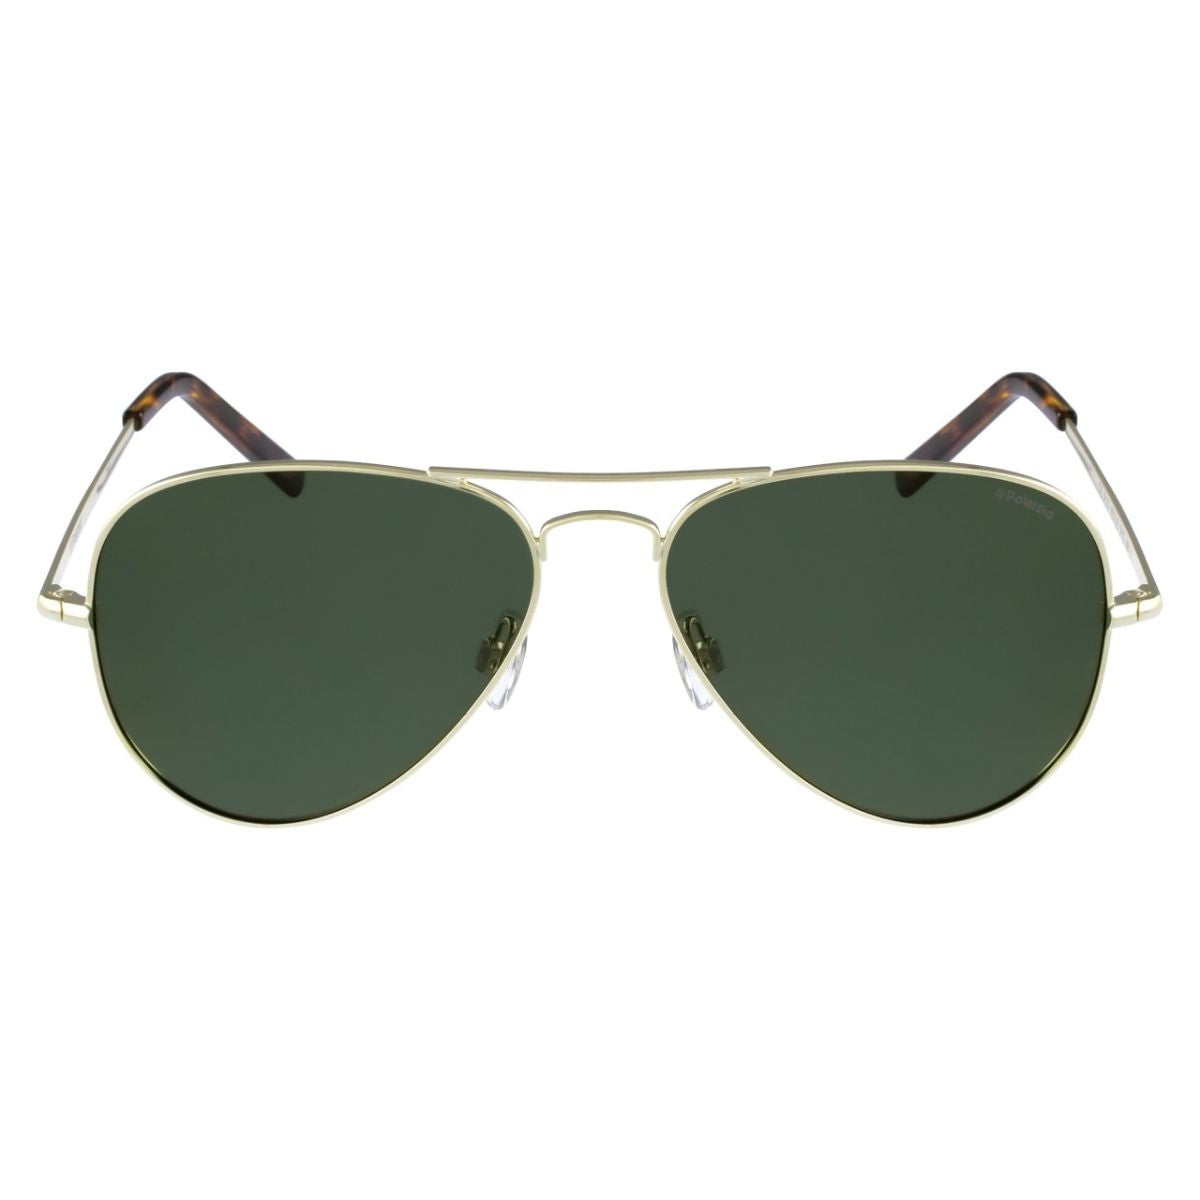 "Shop Trending Aviator Sunglasses For Men's At Optorium"